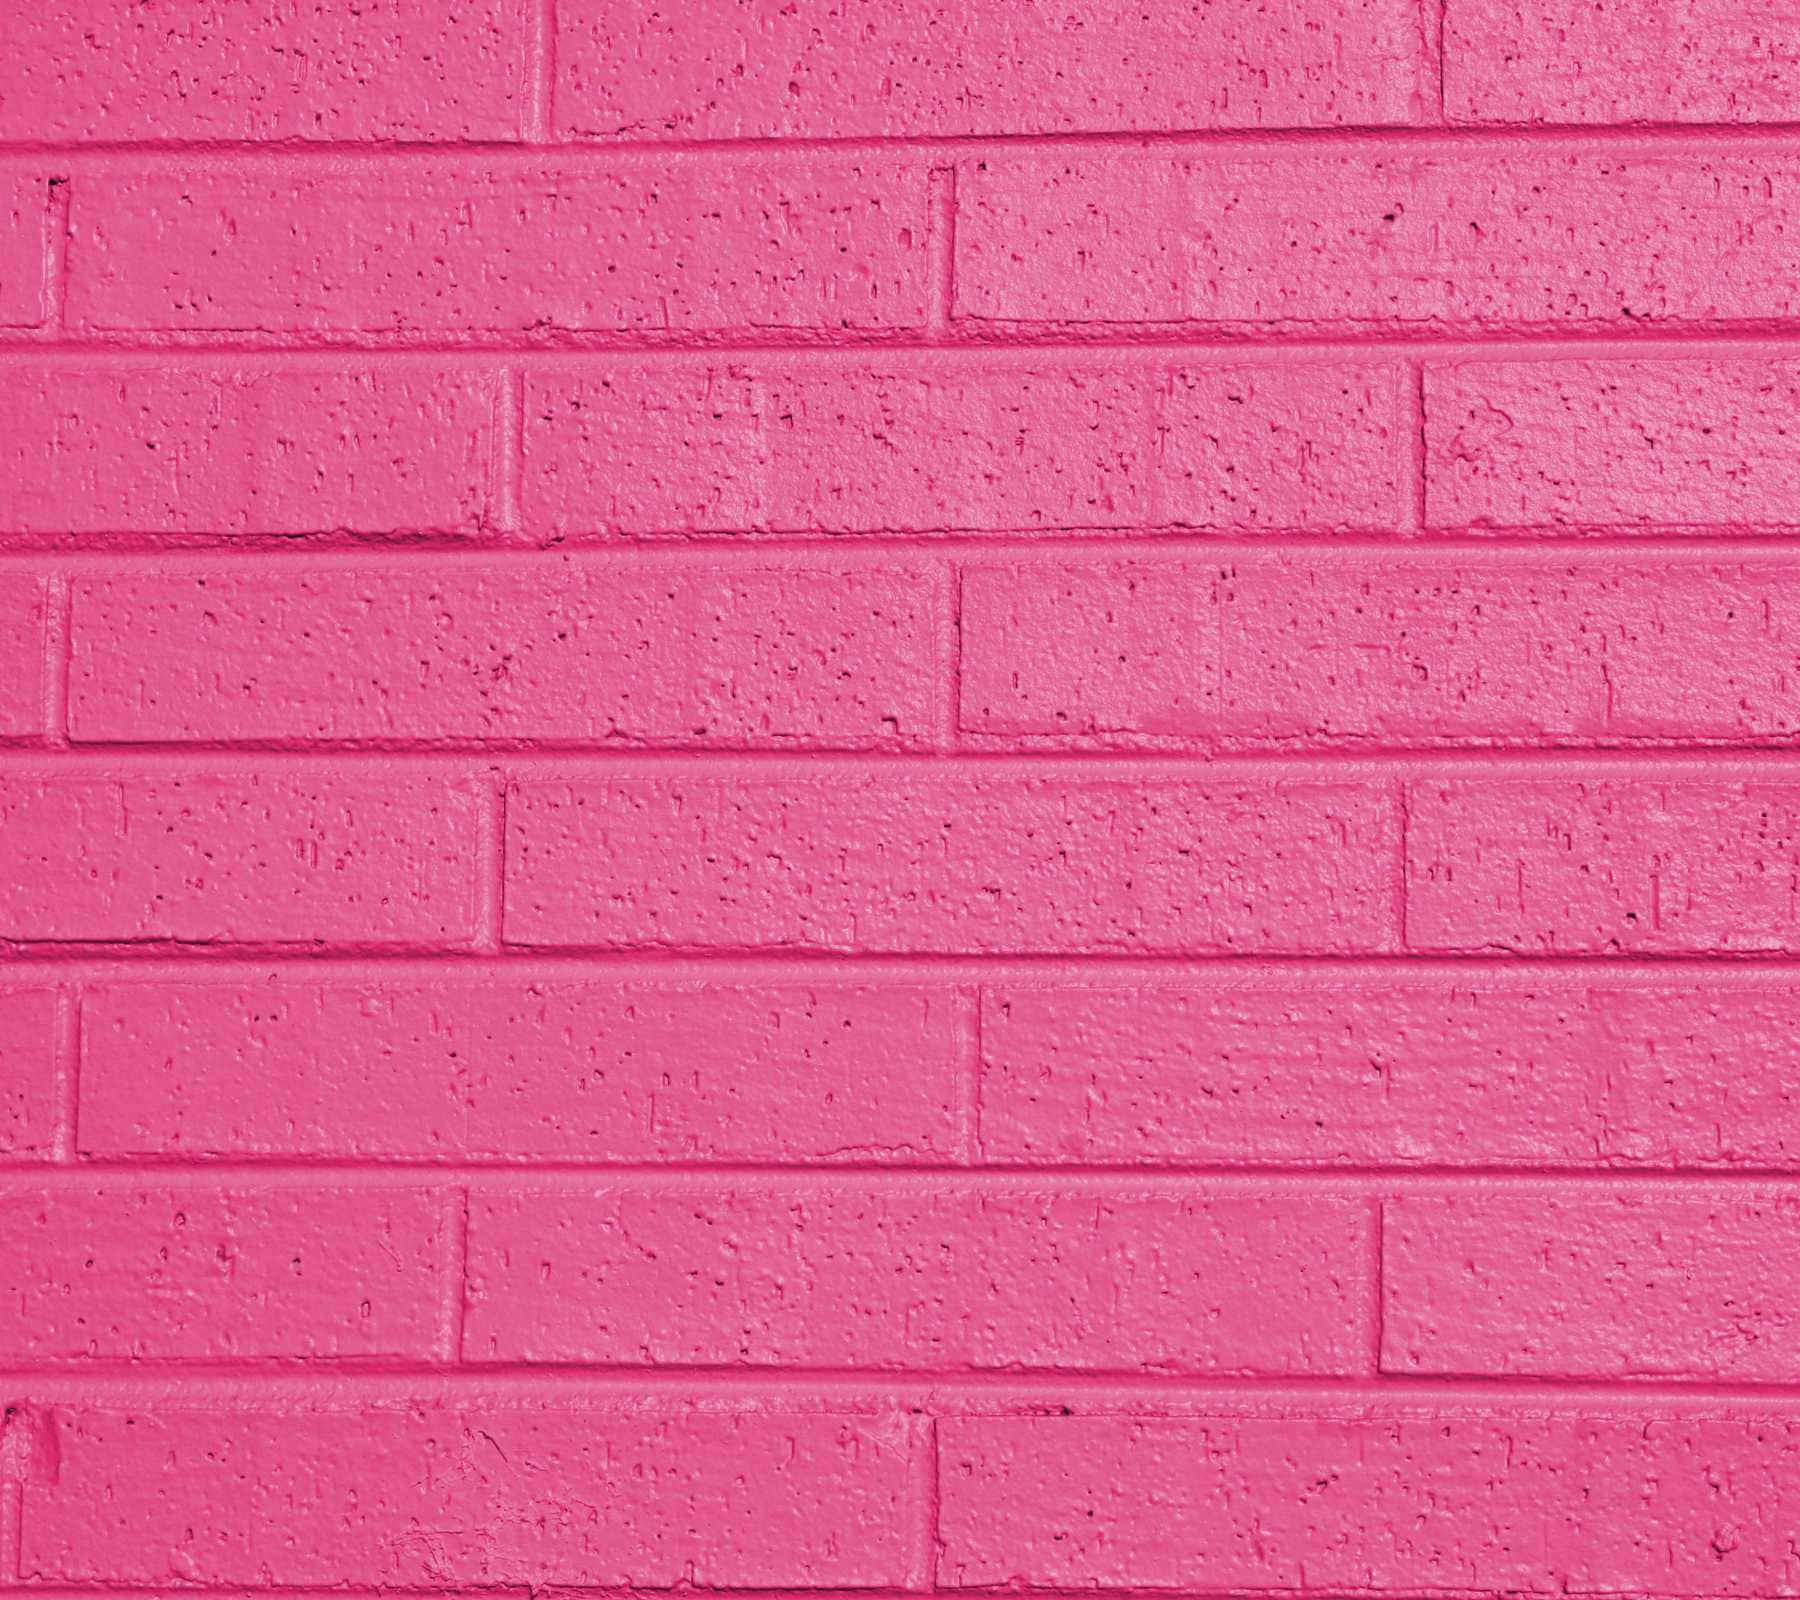 Soft and Elegant Tumblr Pink Background